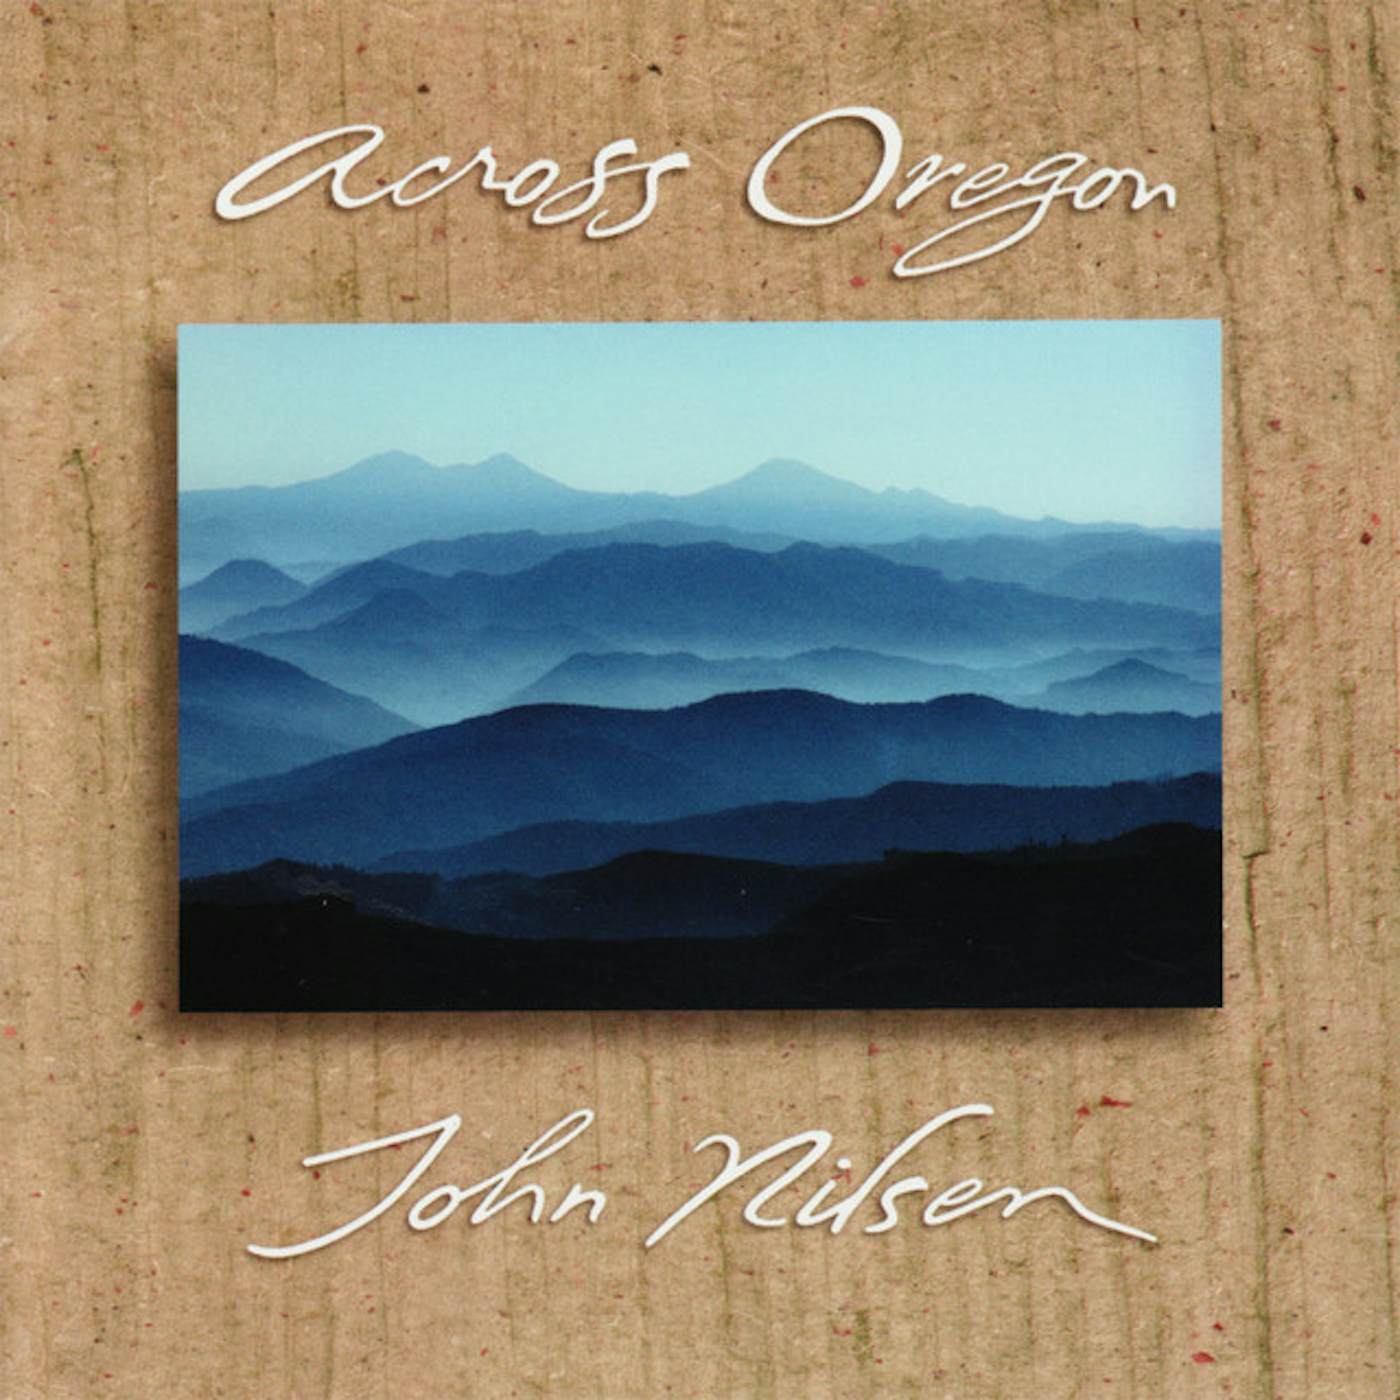 John Nilsen ACROSS OREGON CD